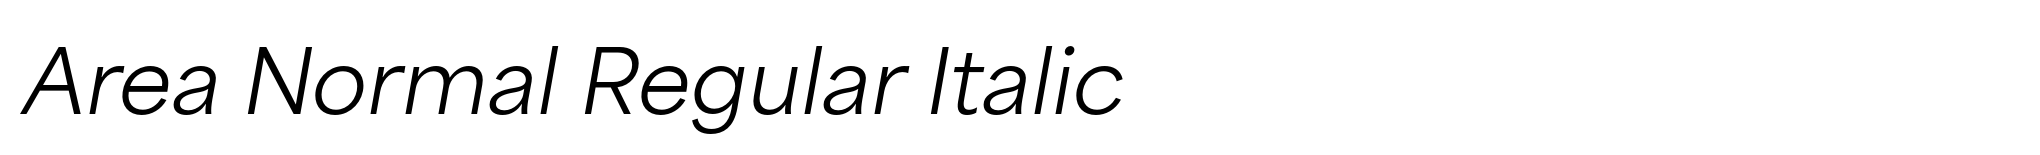 Area Normal Regular Italic image